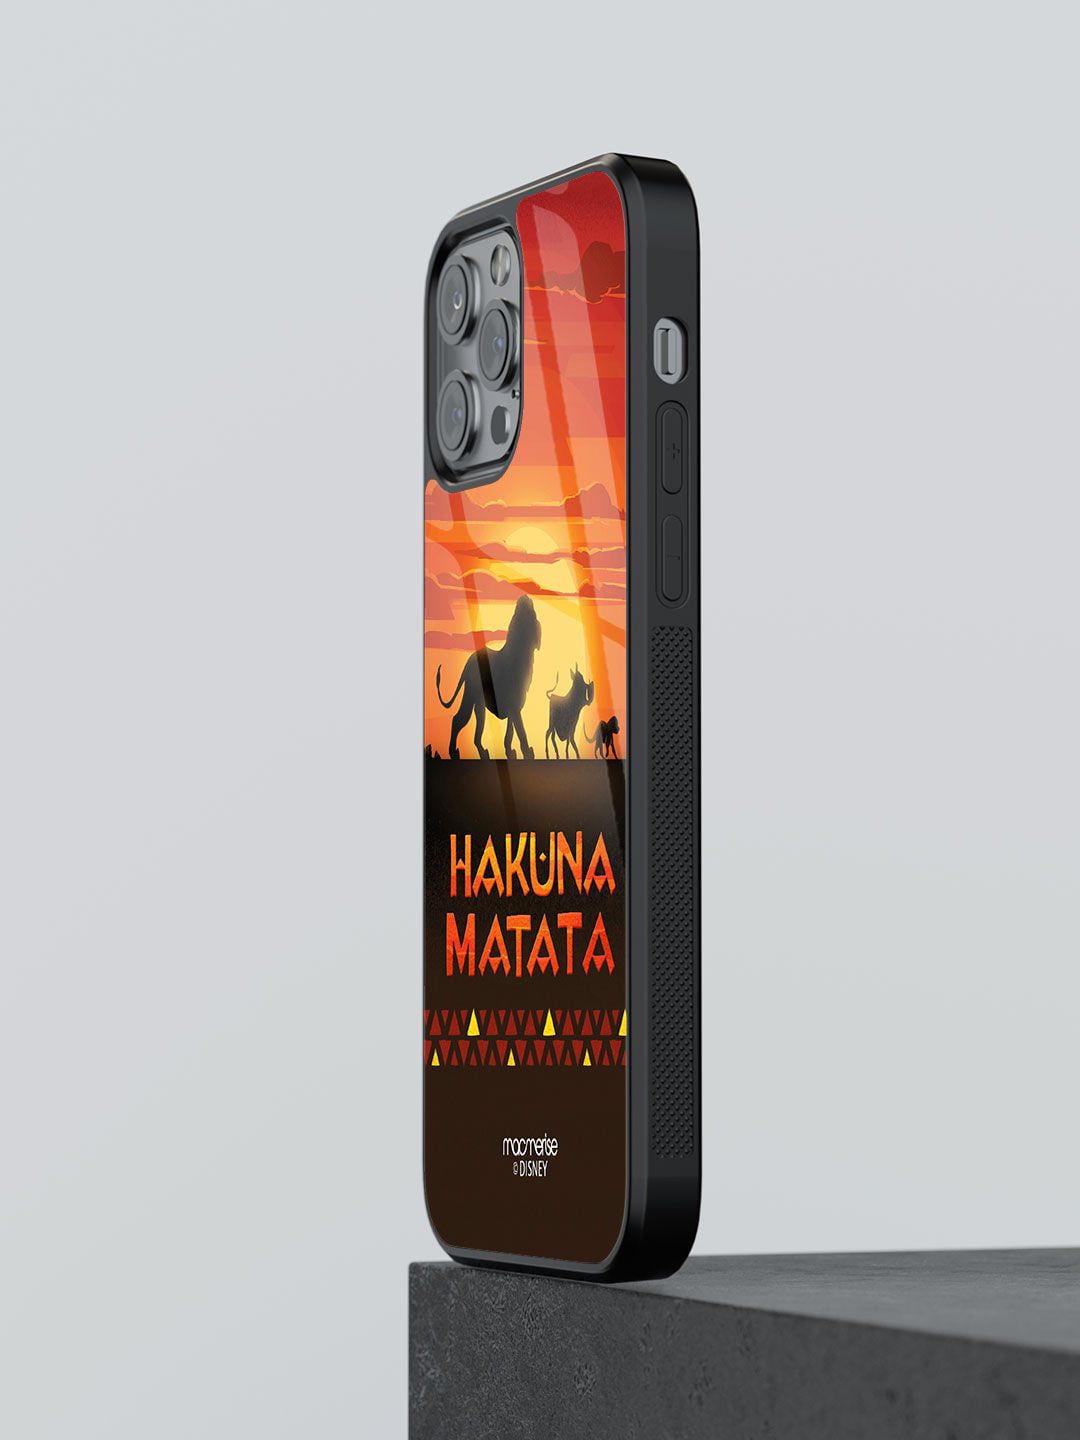 macmerise Orange & Brown Printed Glass iPhone 12 Pro Max Back Case Price in India